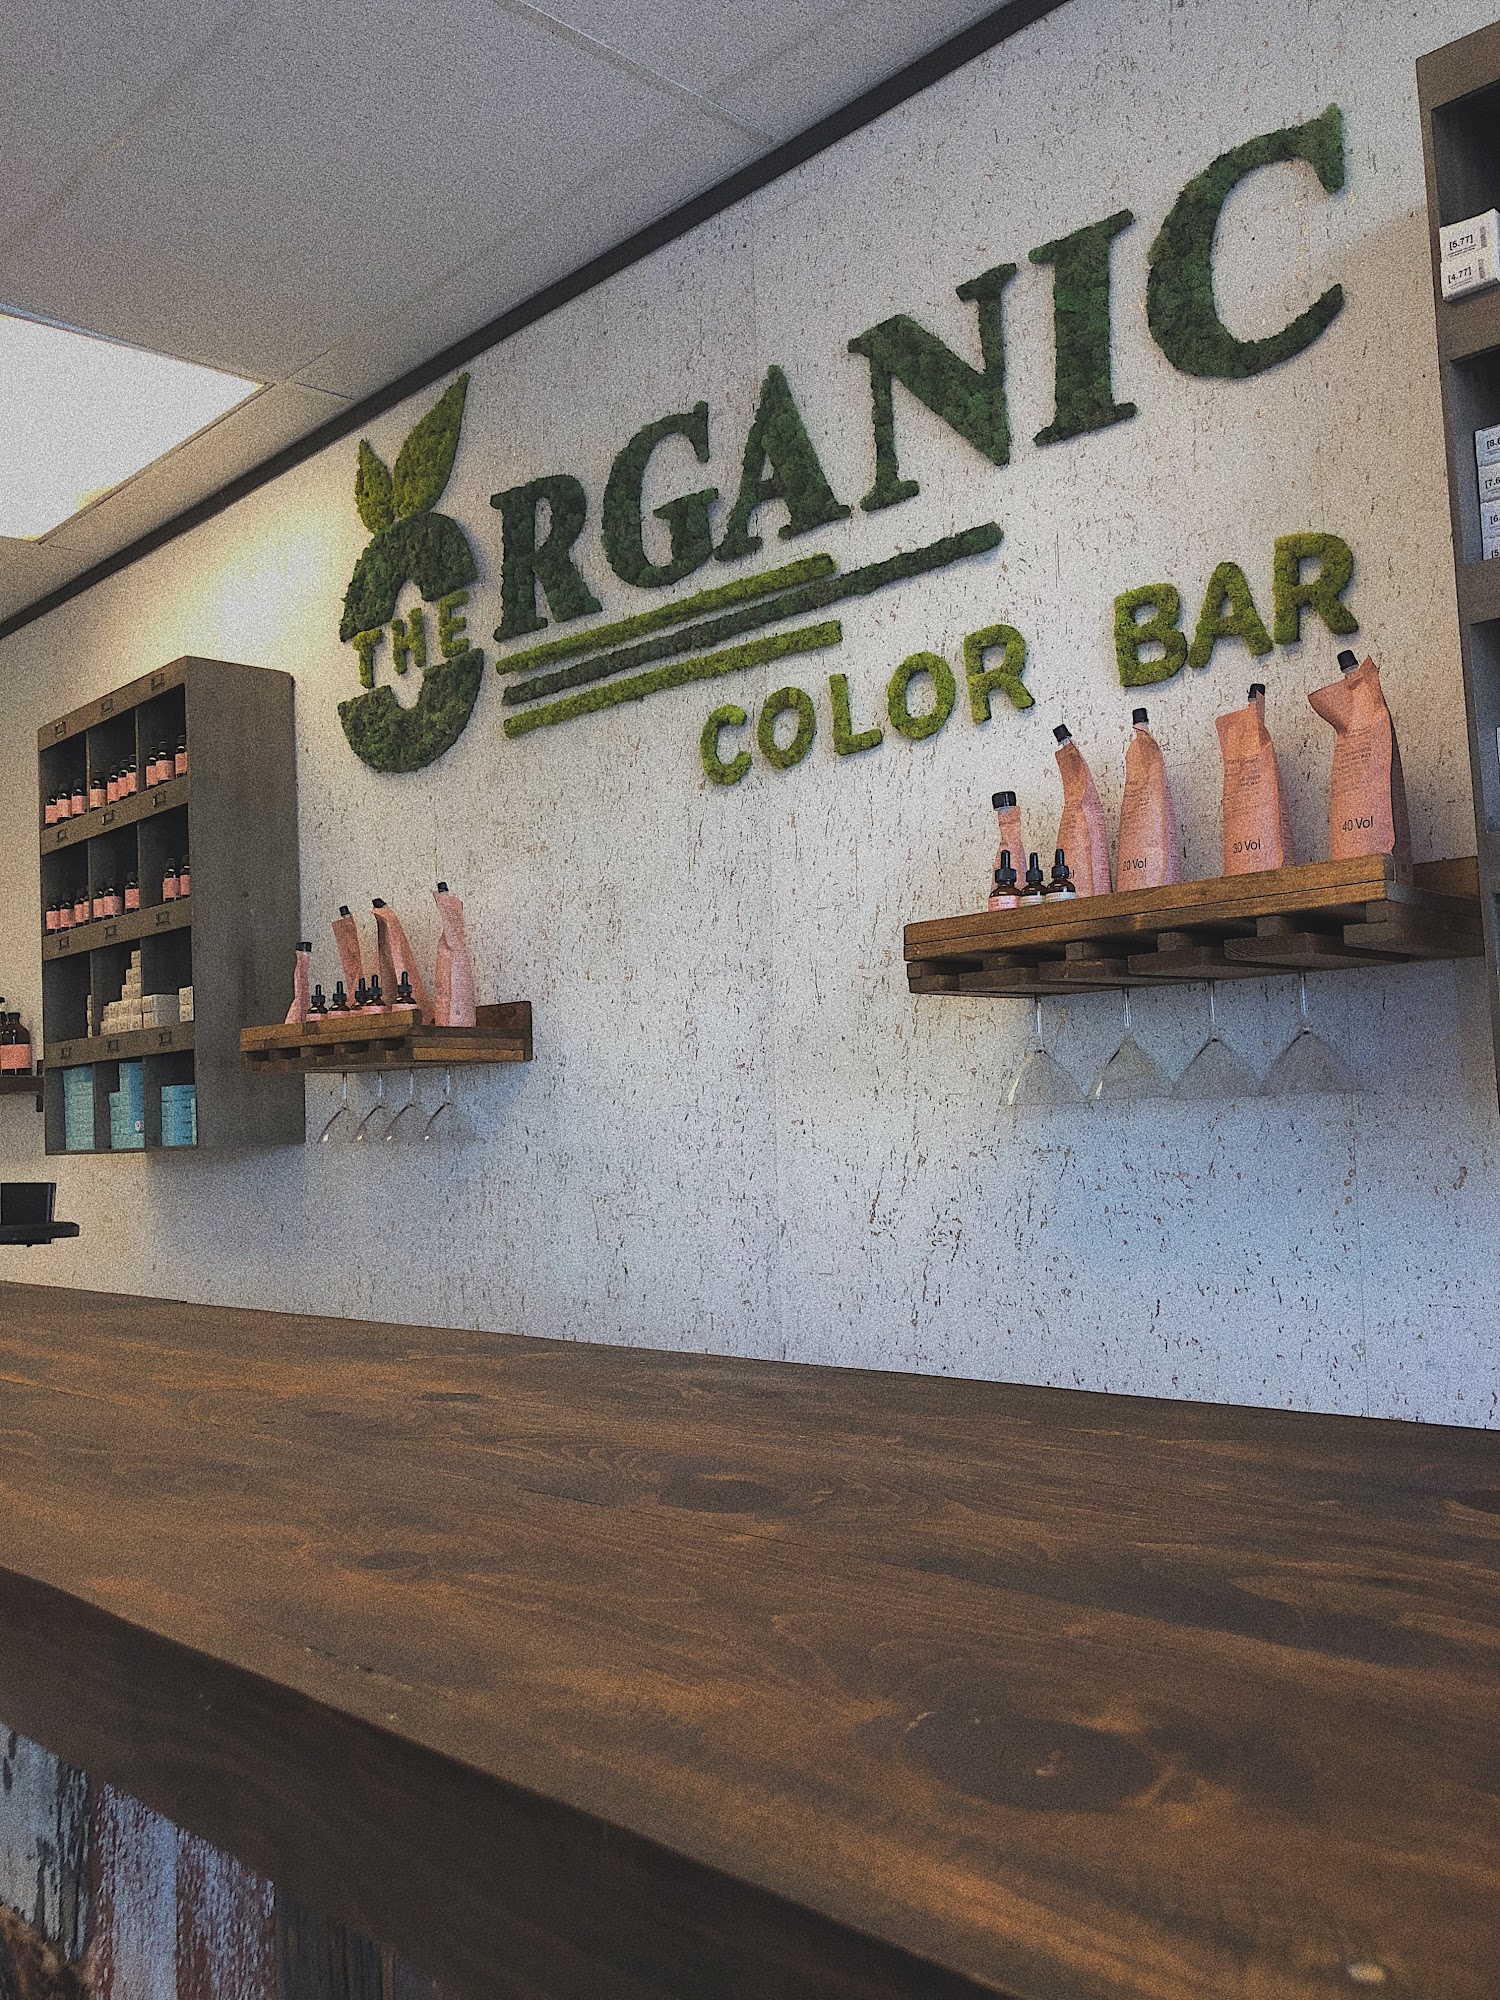 The Organic Color bar